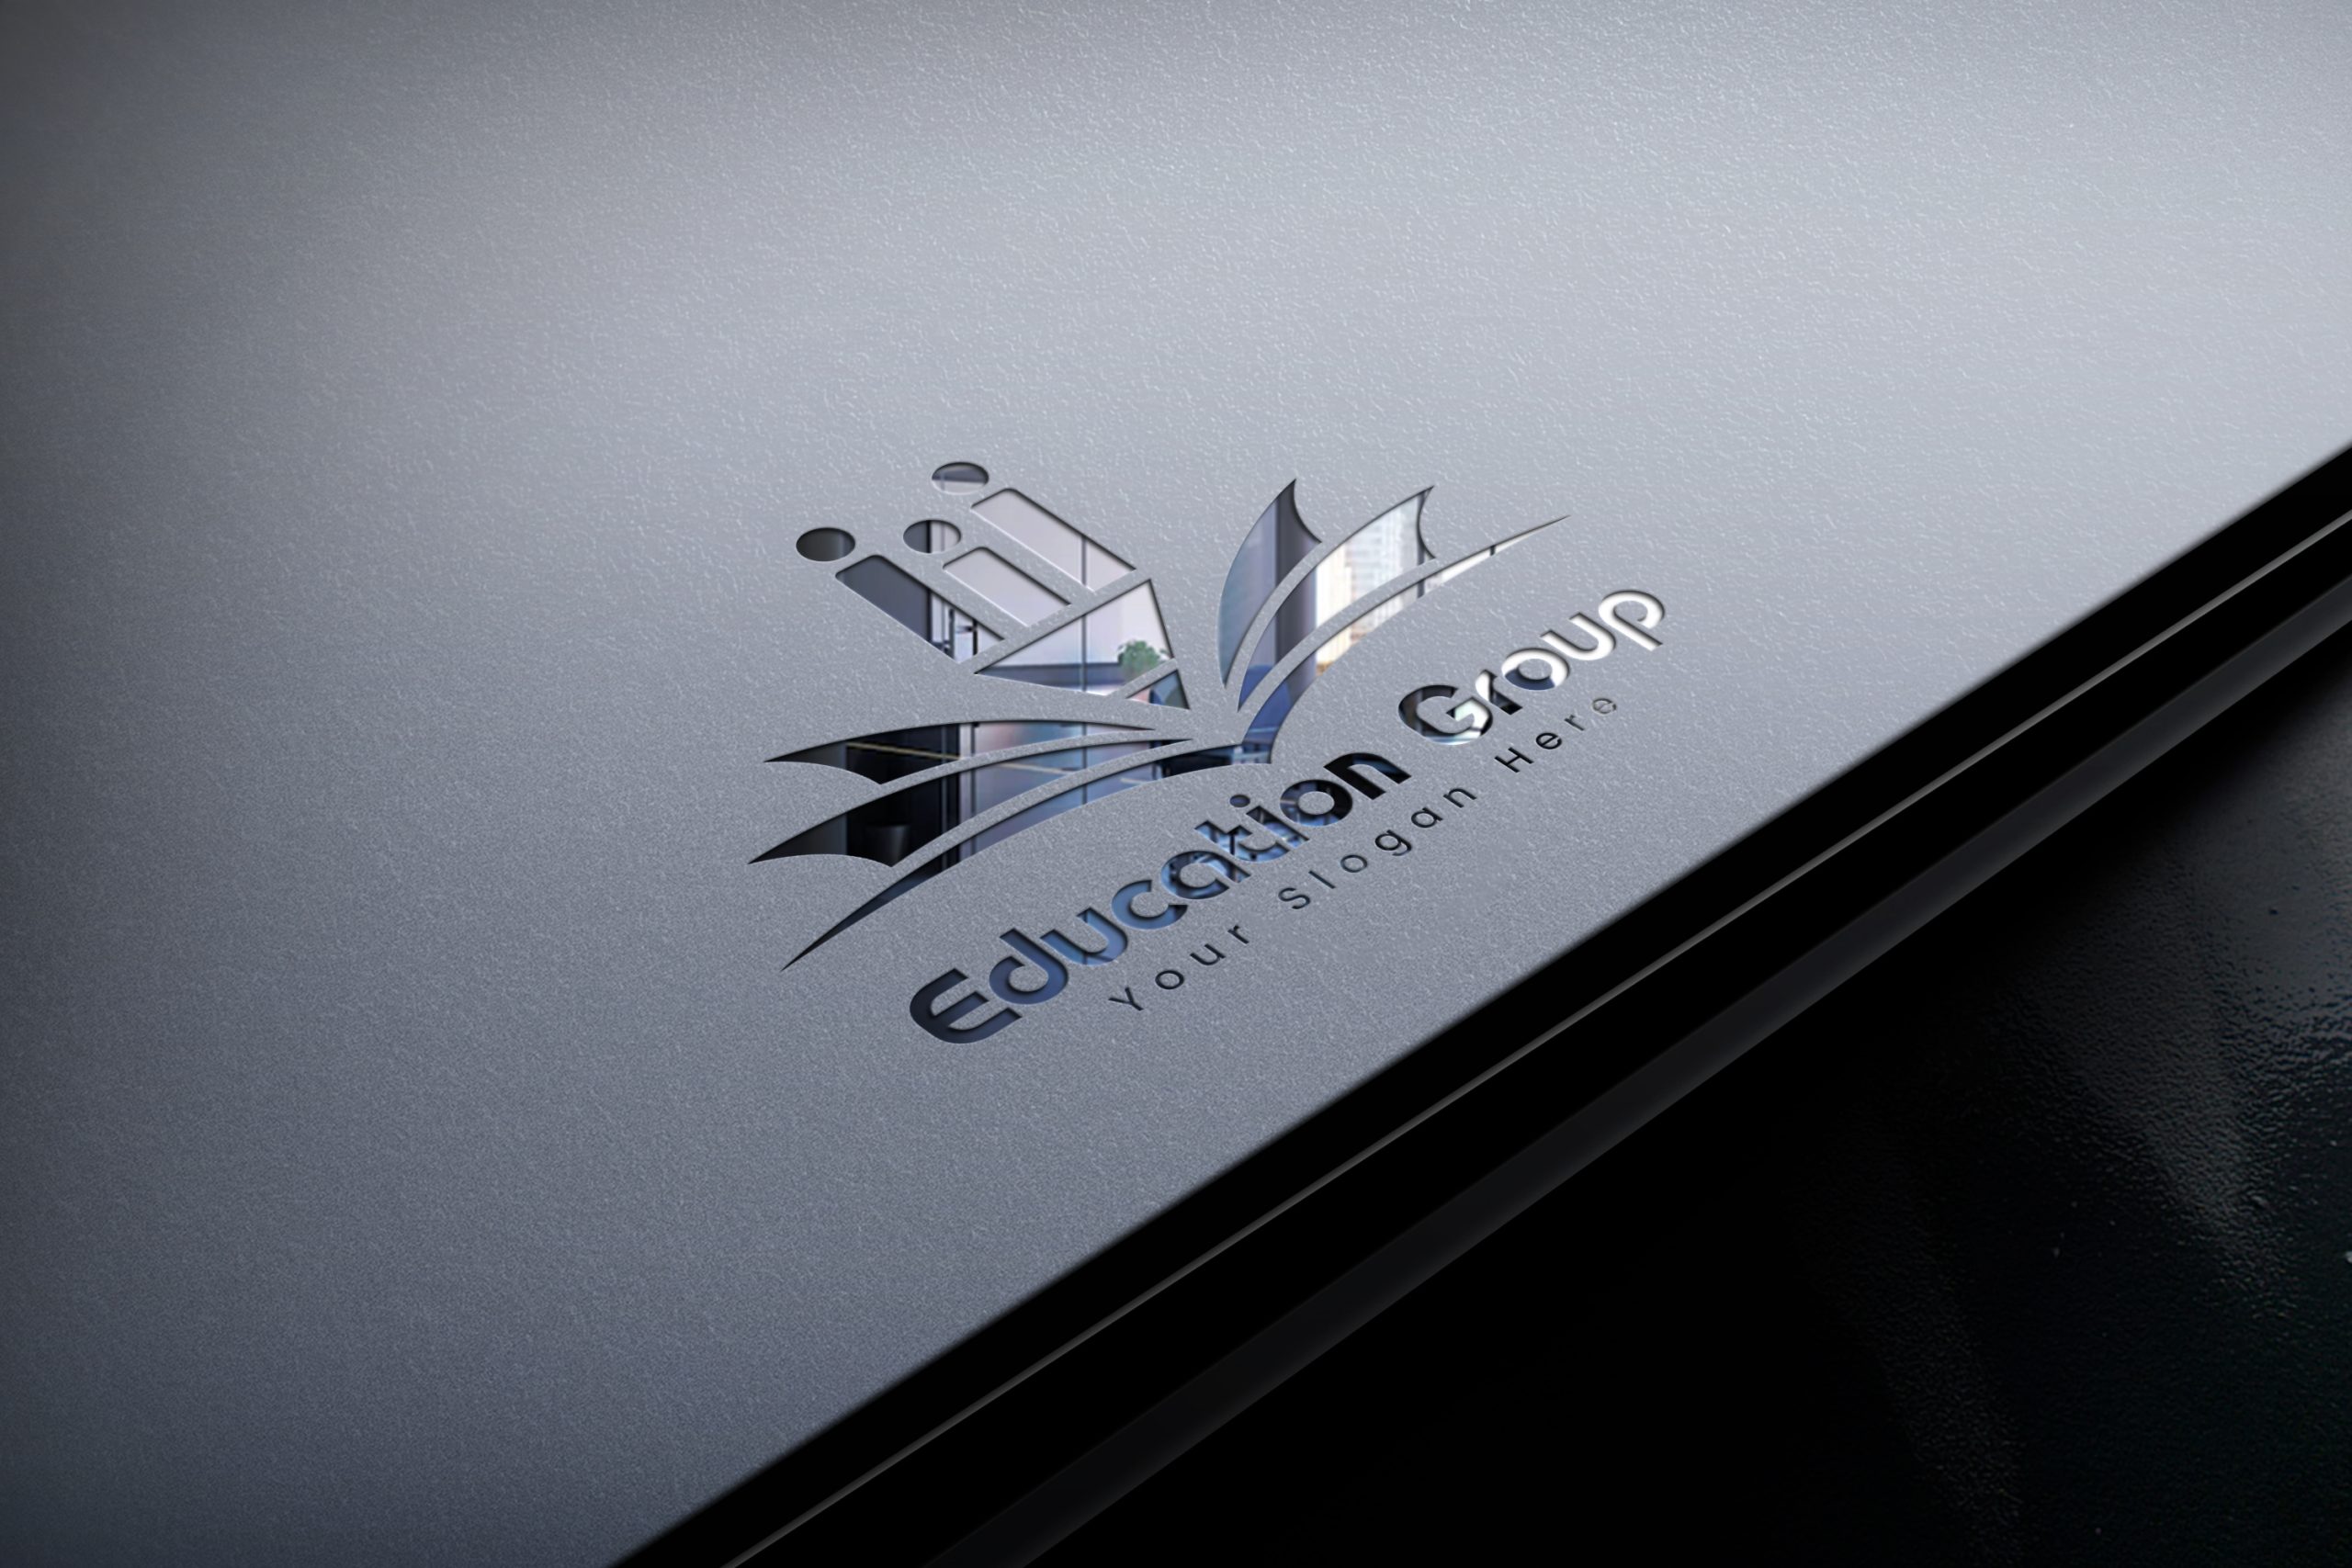 Education Group Logo Design